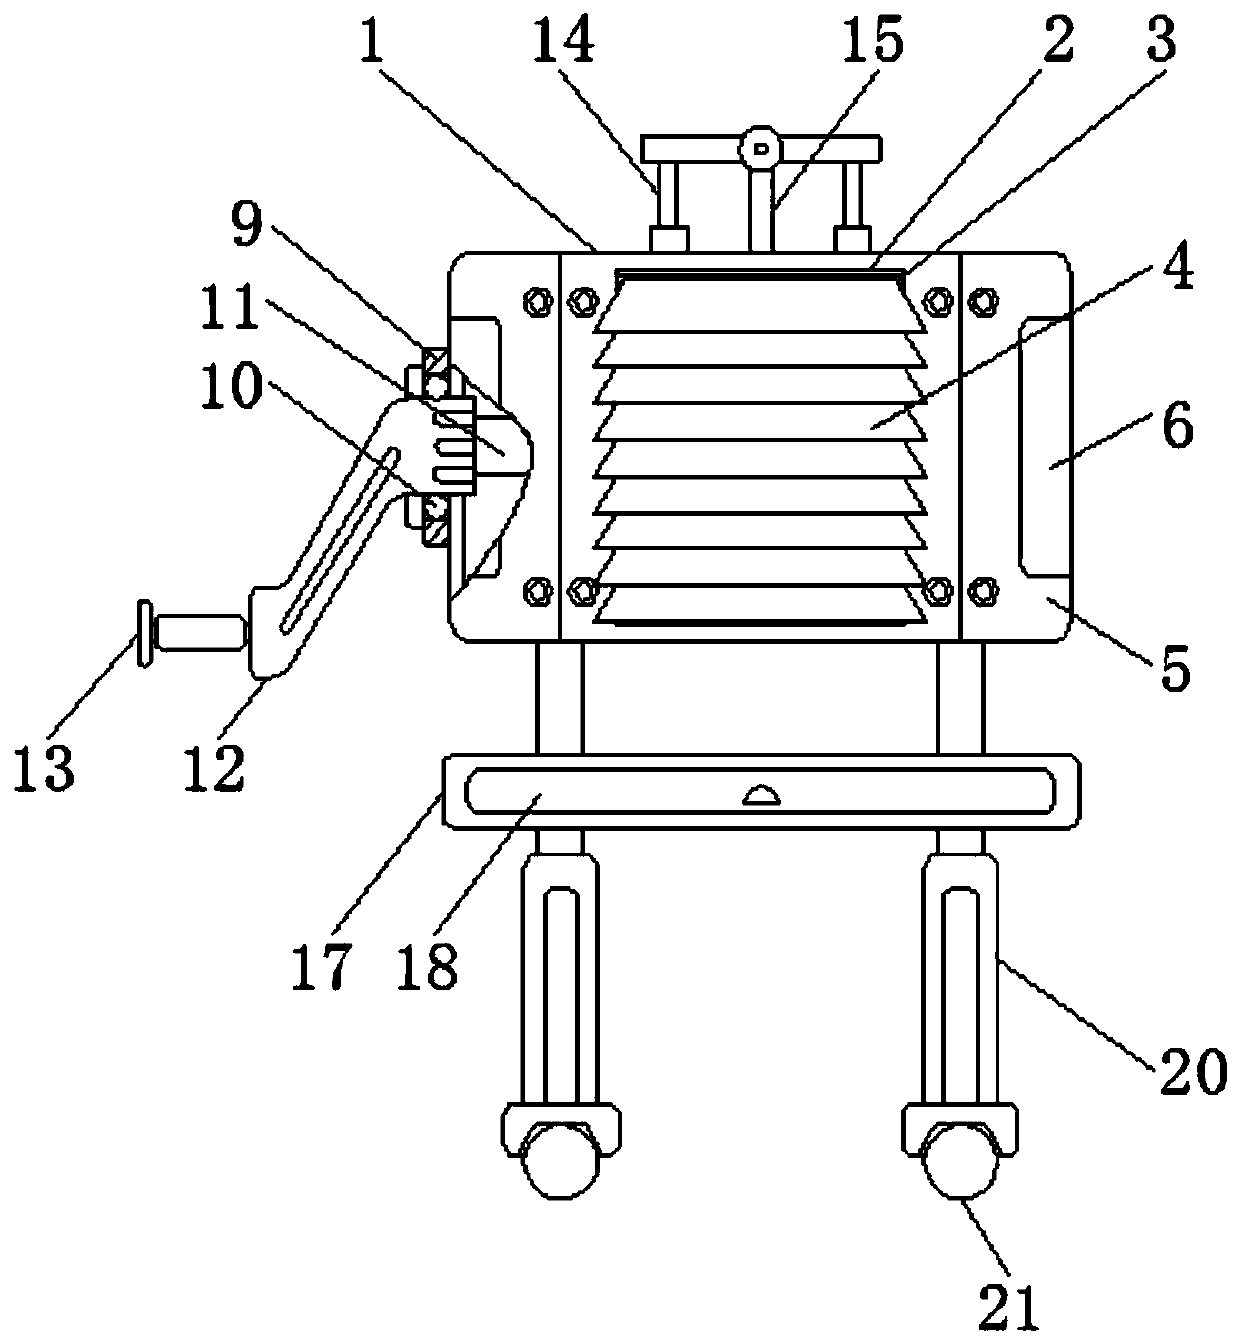 A medical rotating arm type hot air box